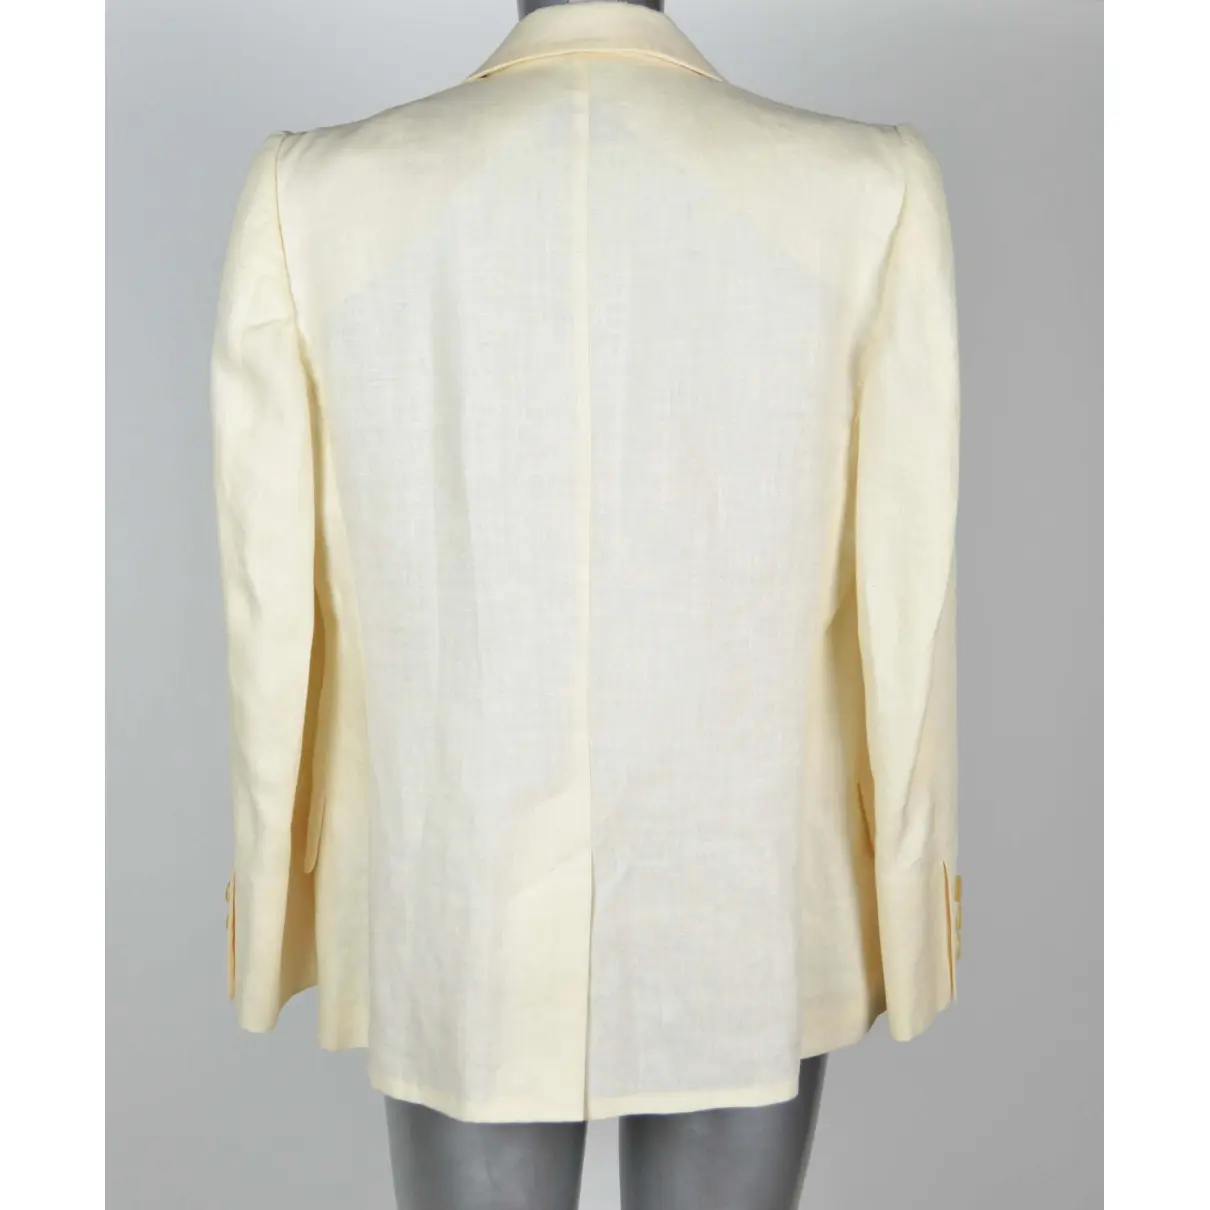 Buy Moschino Cheap And Chic Linen blazer online